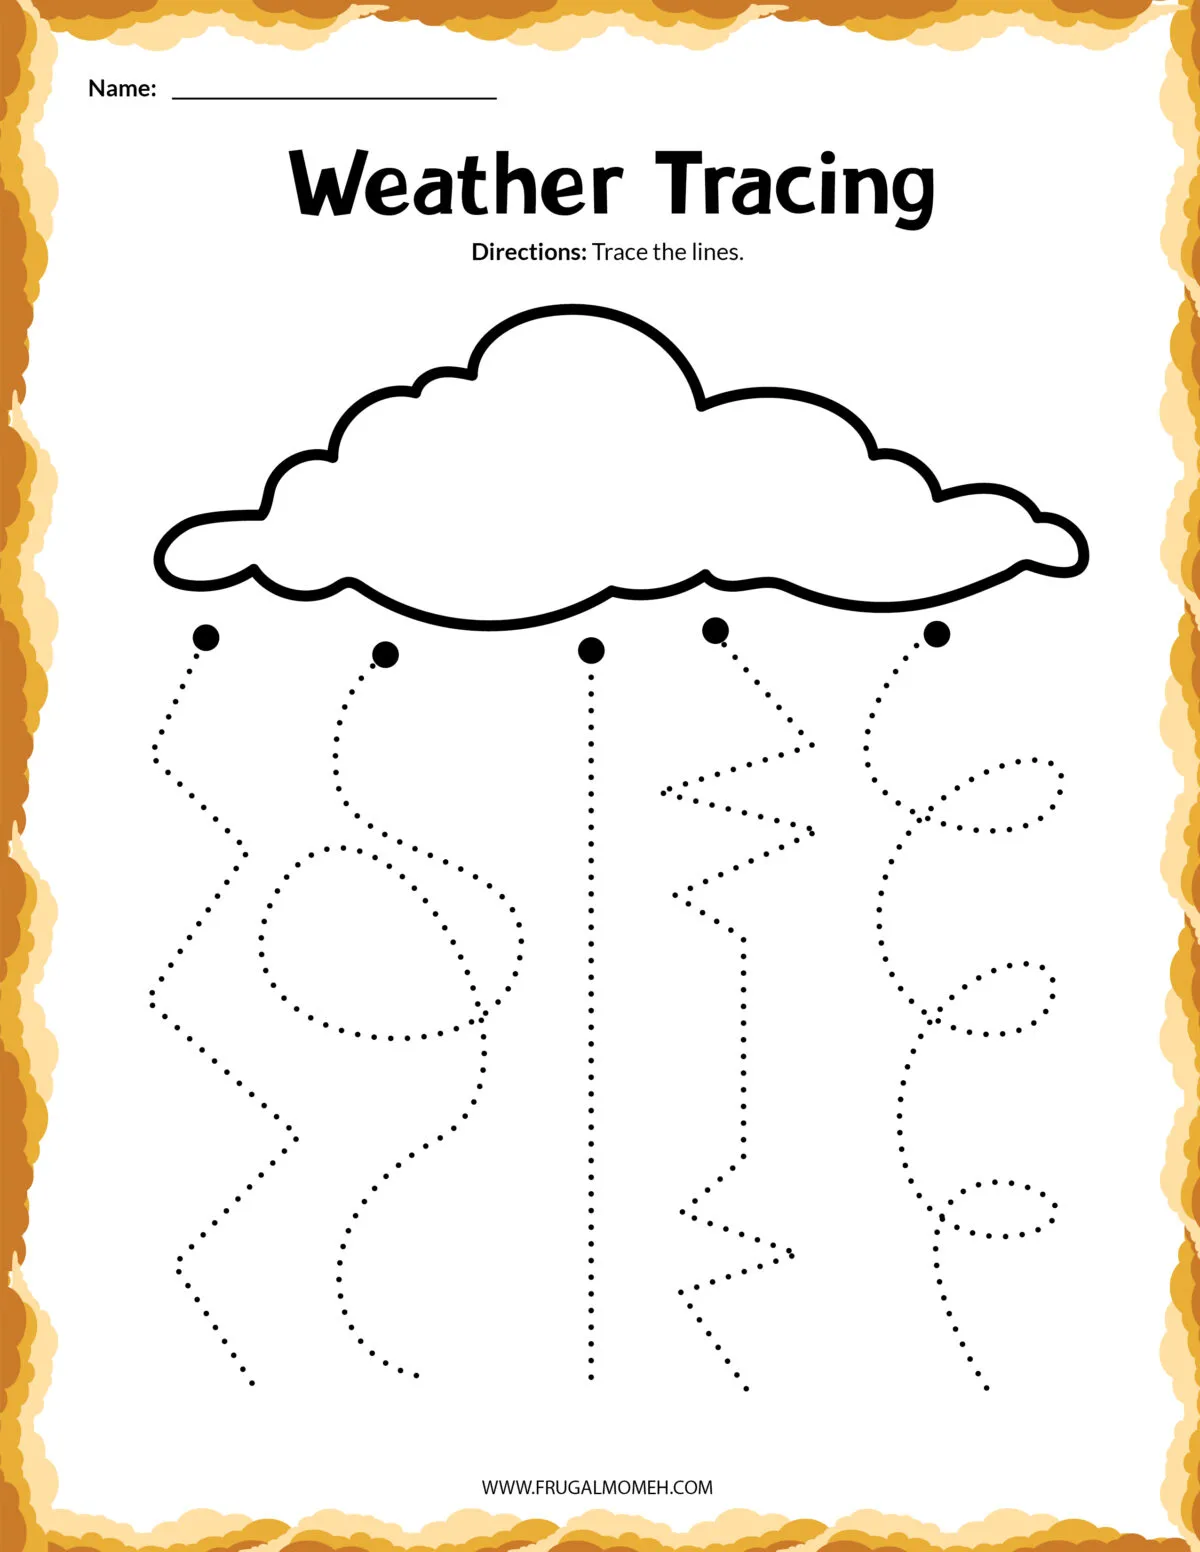 Weather tracing printable sheet.